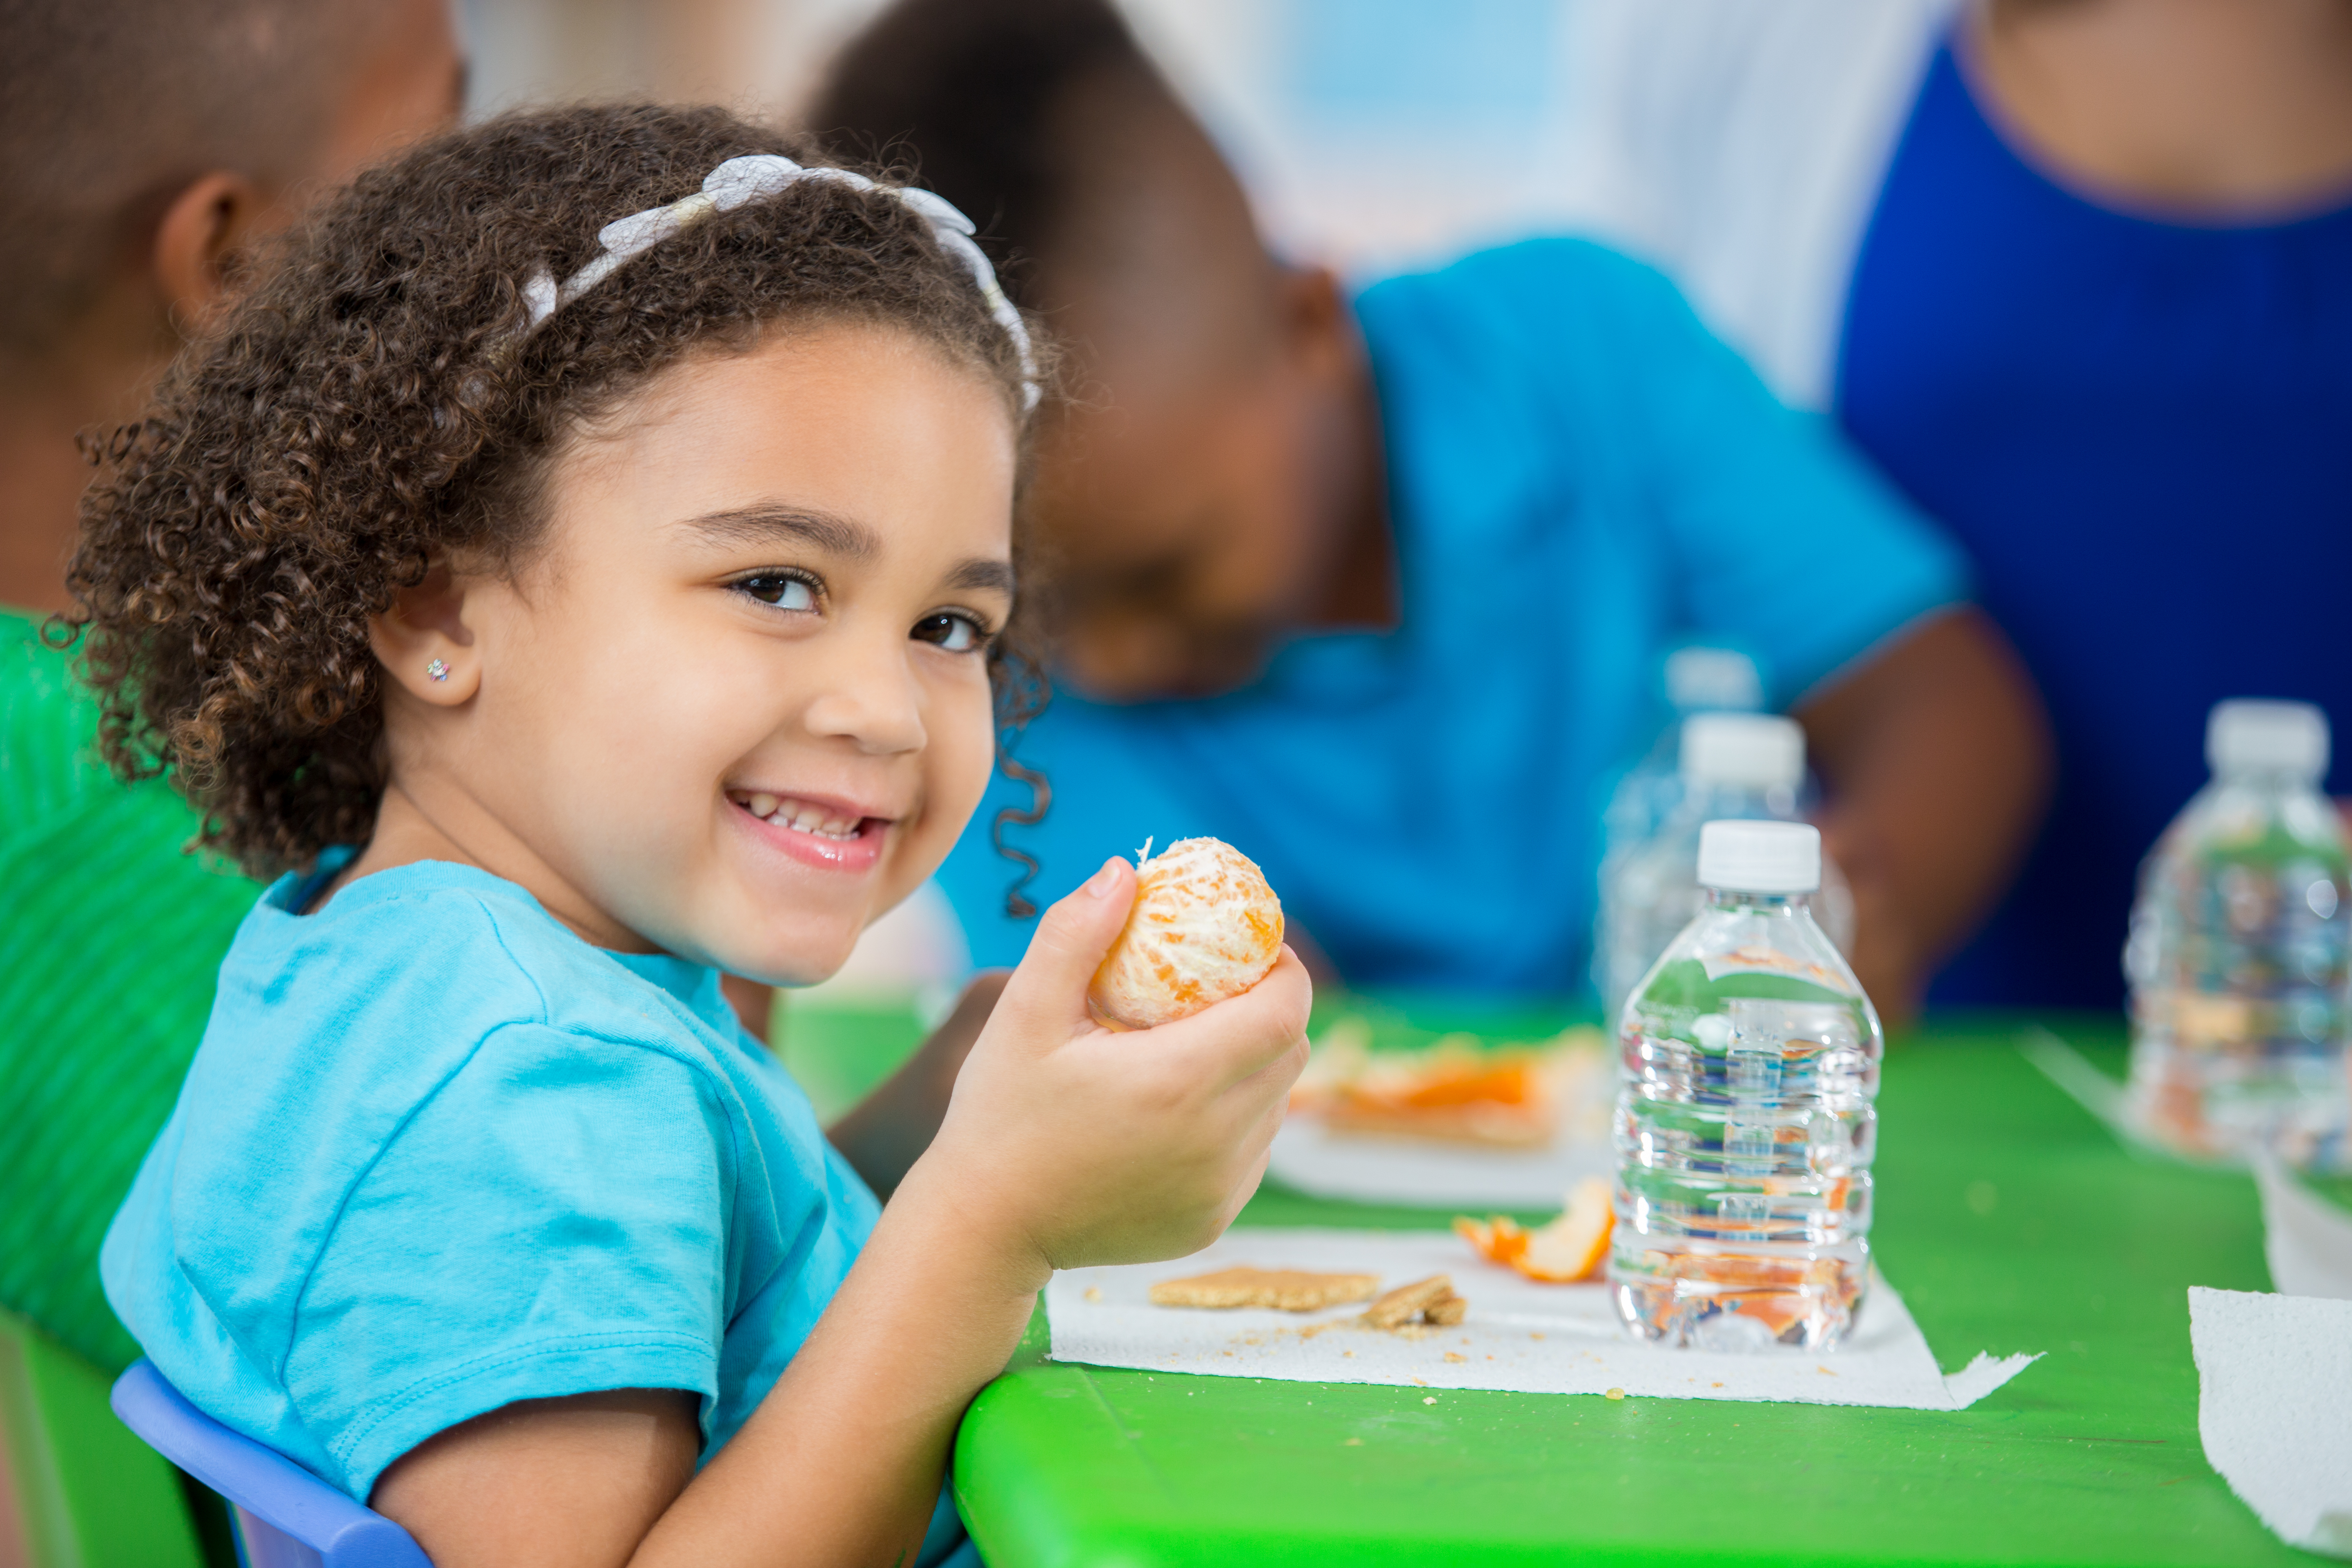 Child Care Food Program CCFP